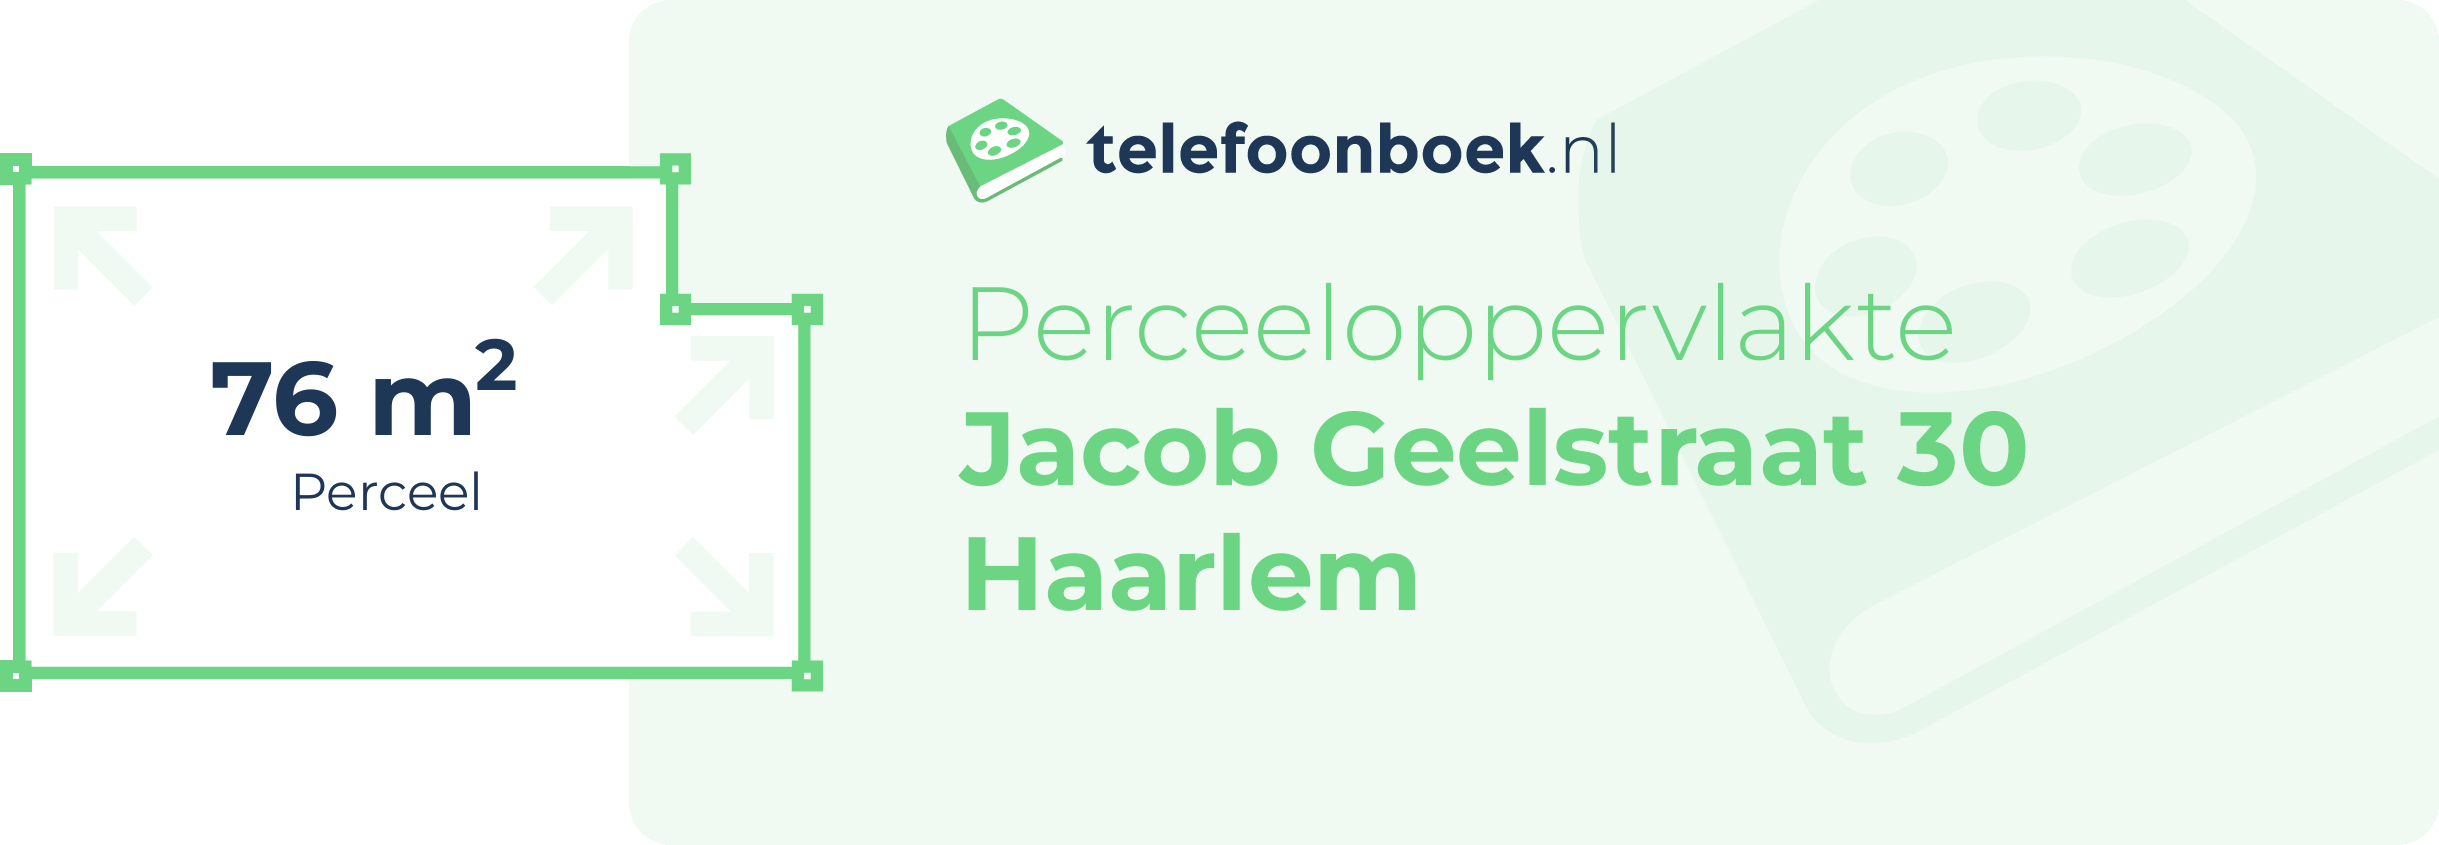 Perceeloppervlakte Jacob Geelstraat 30 Haarlem